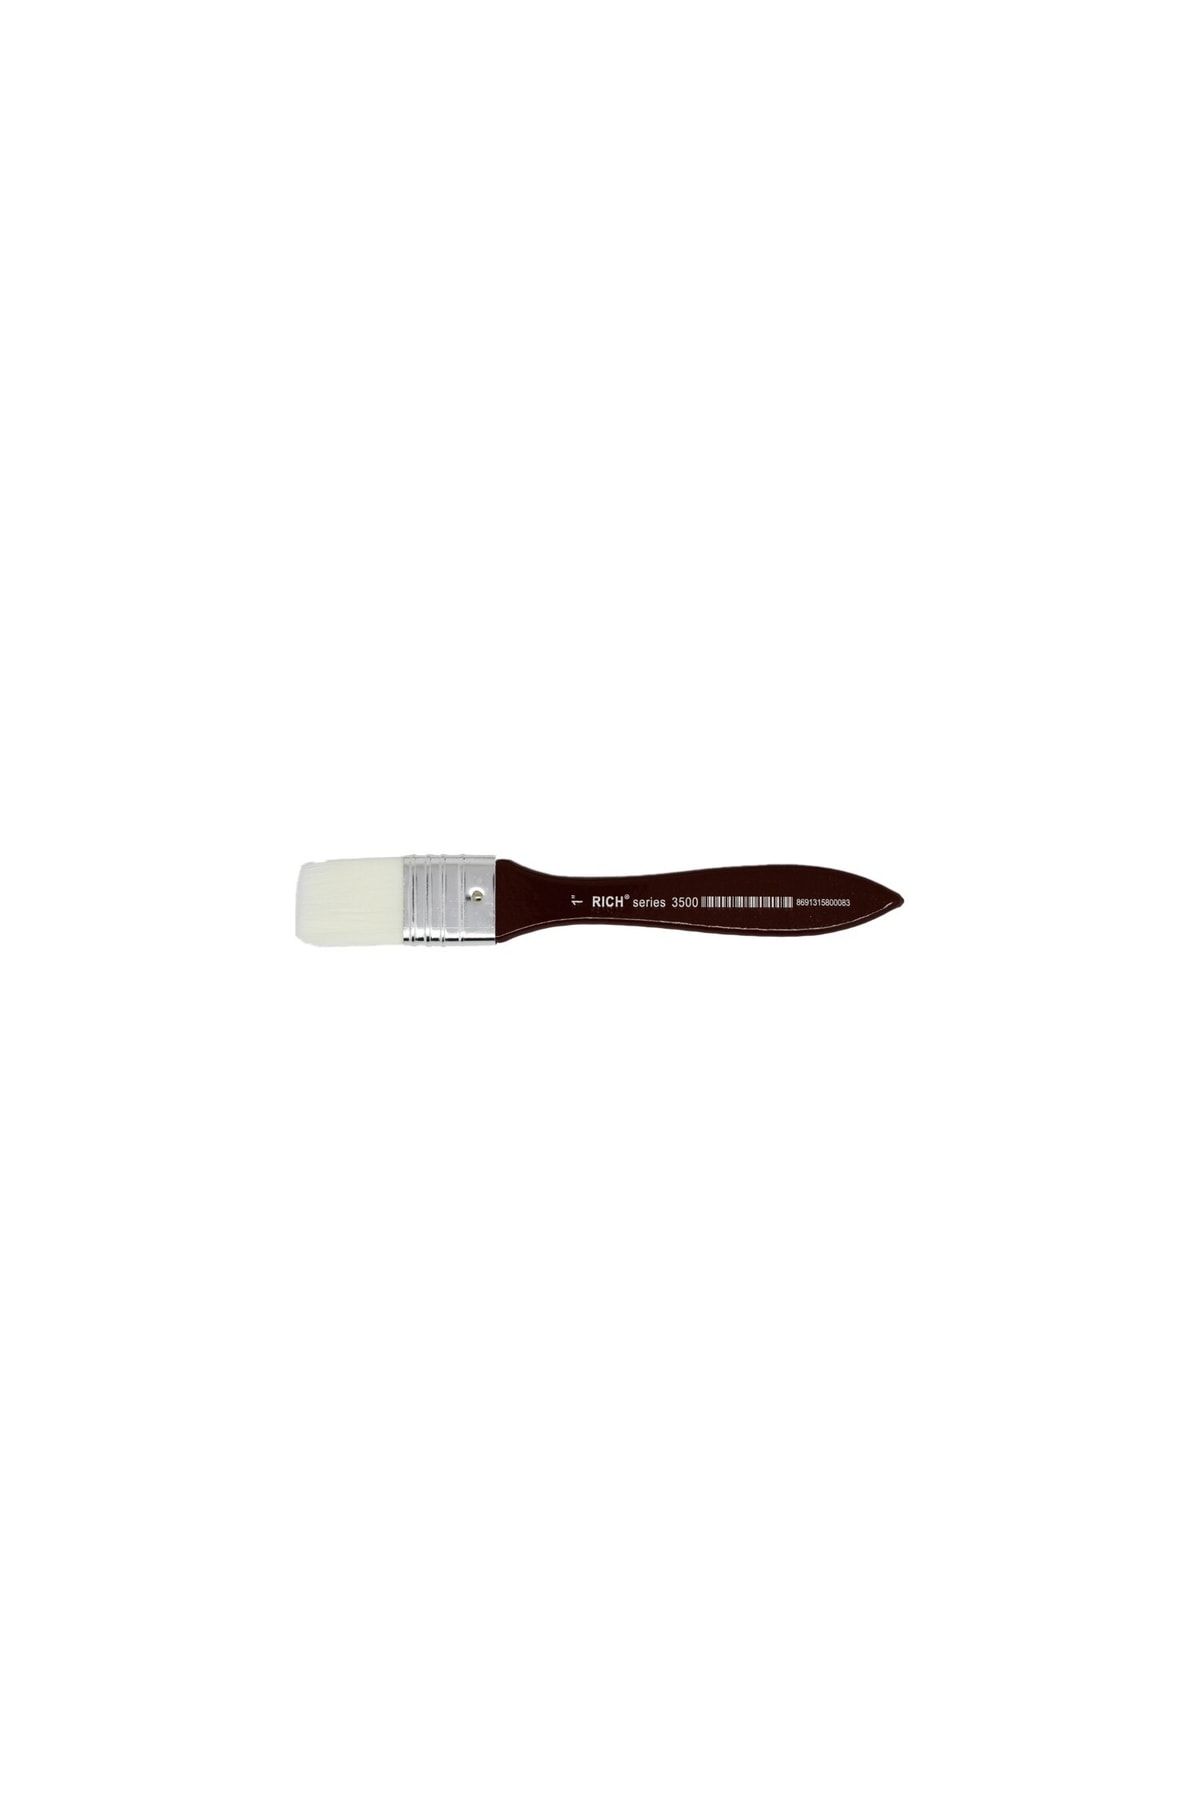 Rich Zemin Fırçası Bordo Saplı Beyaz Sentetik 3500 Seri No:1 Frç-01287